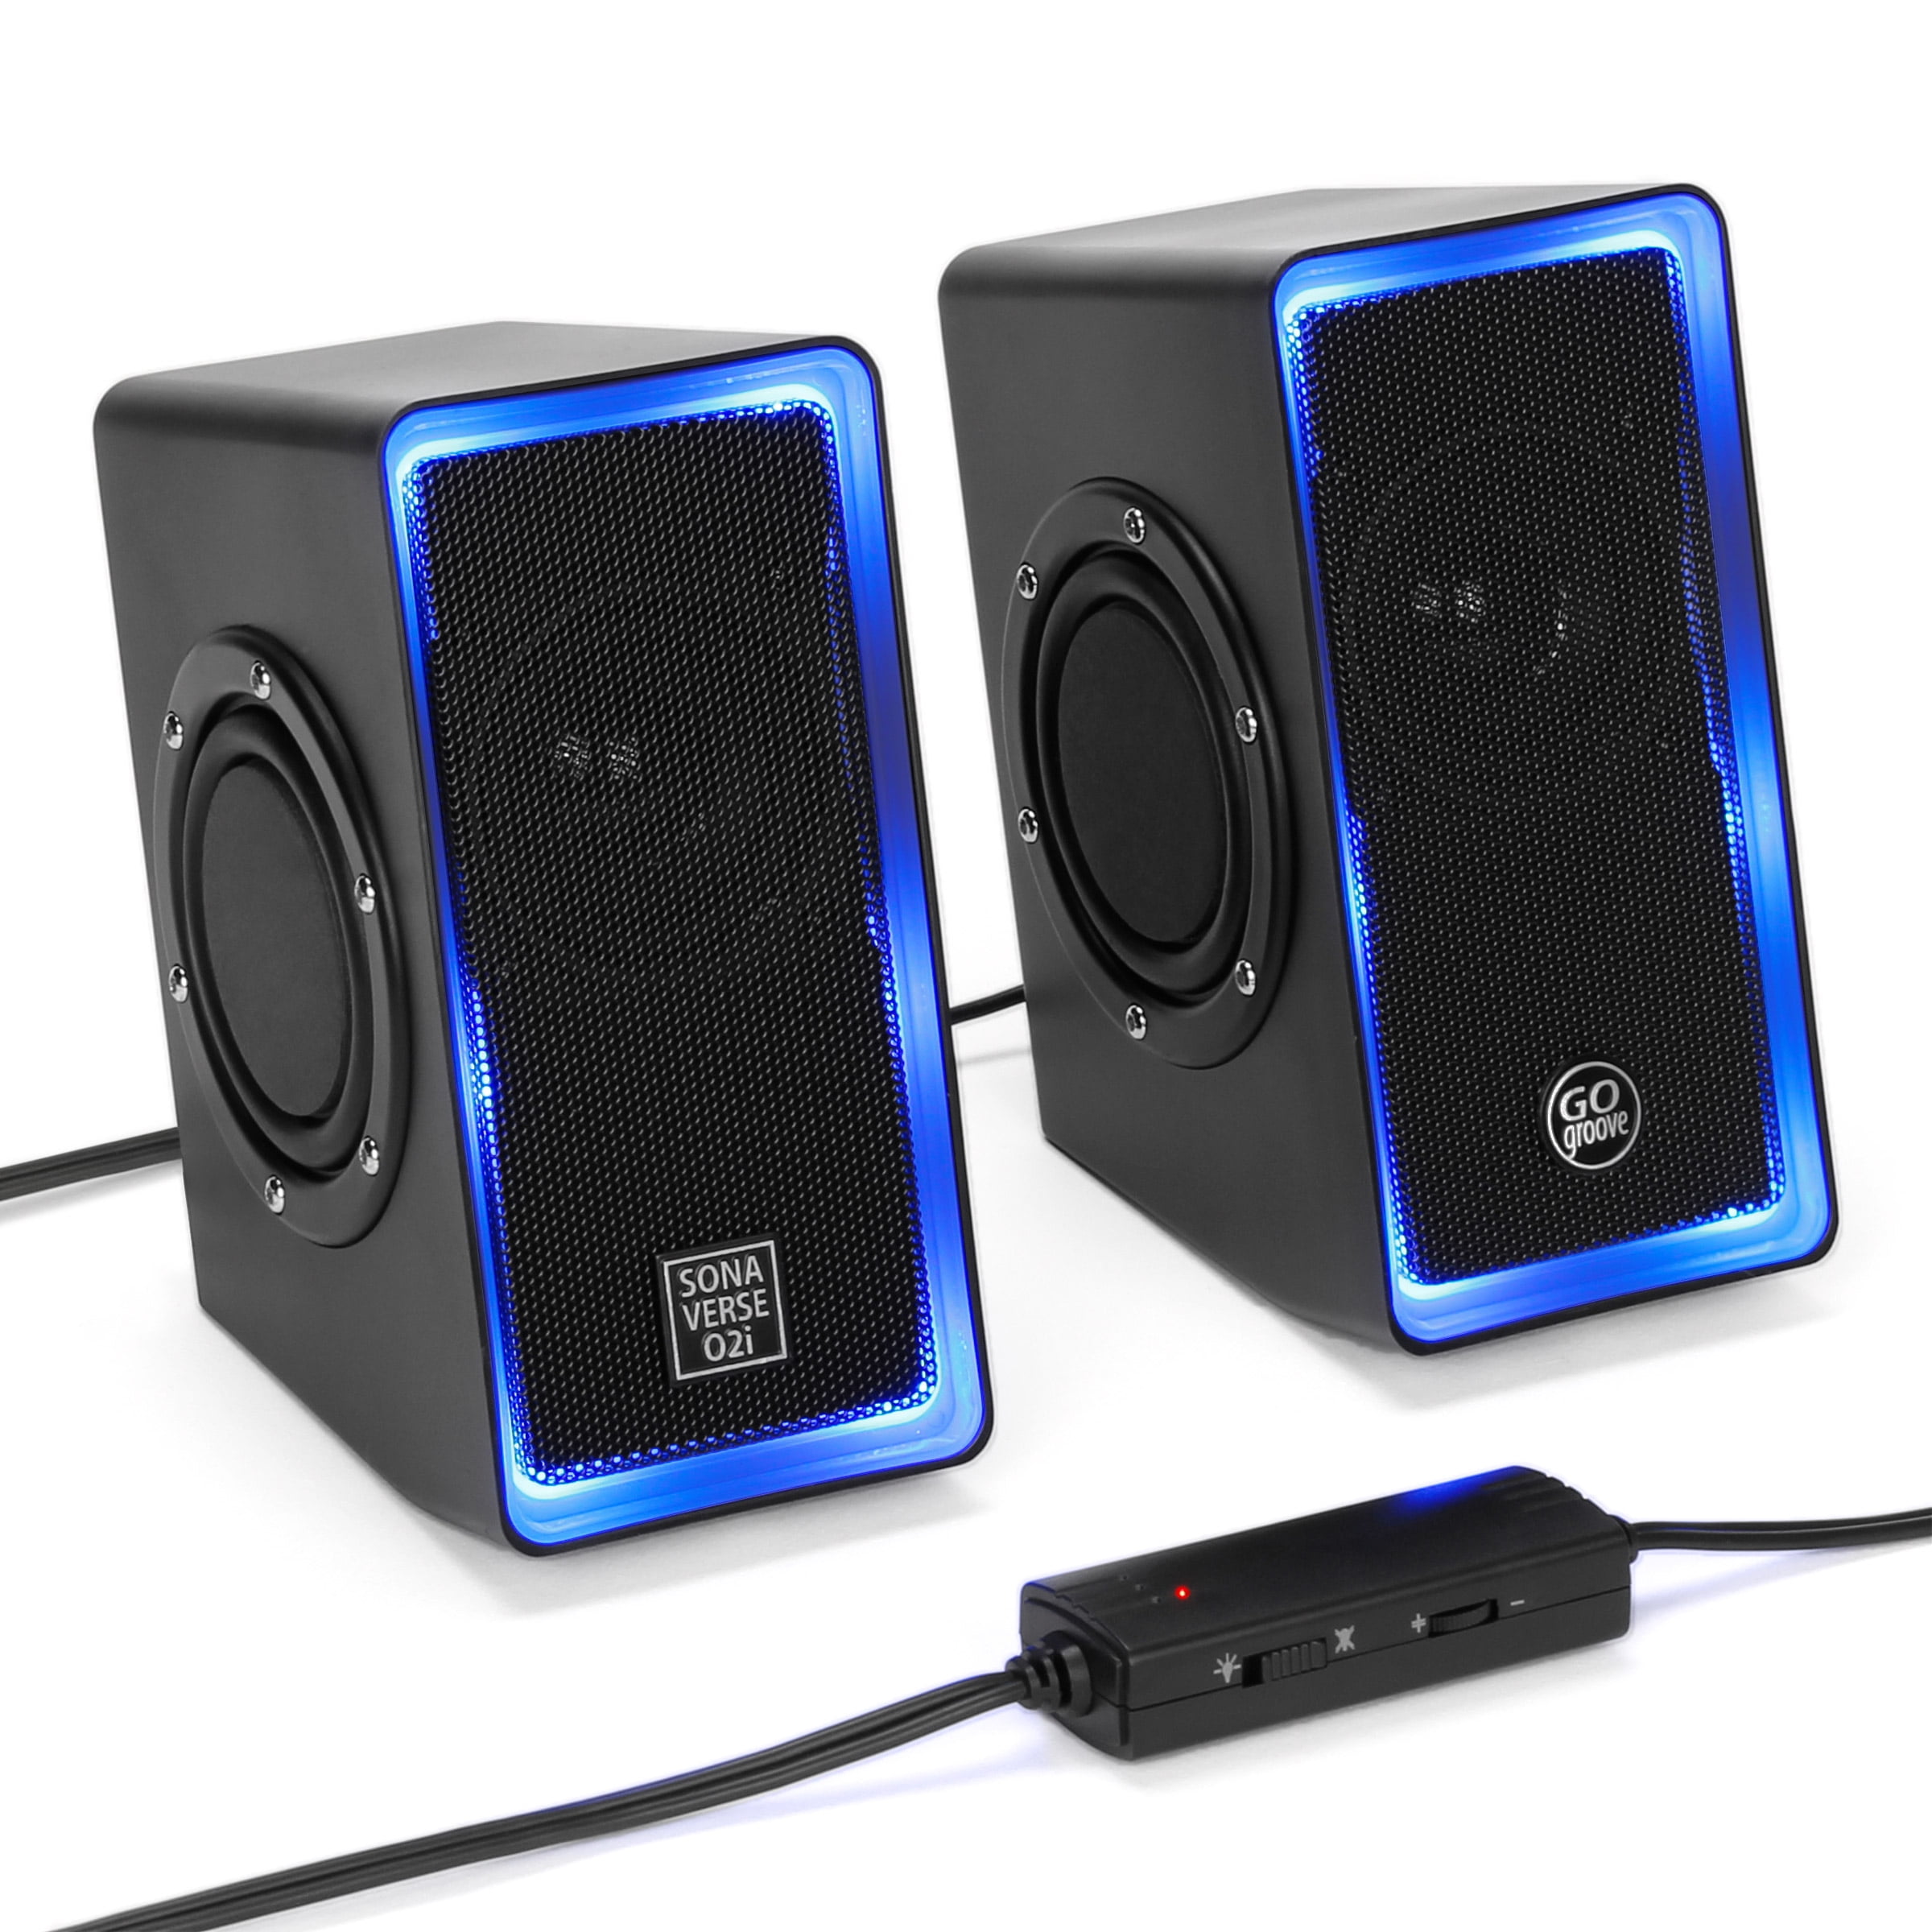 GOgroove Desktop Speakers for Laptop Computer (Black with LEDs)